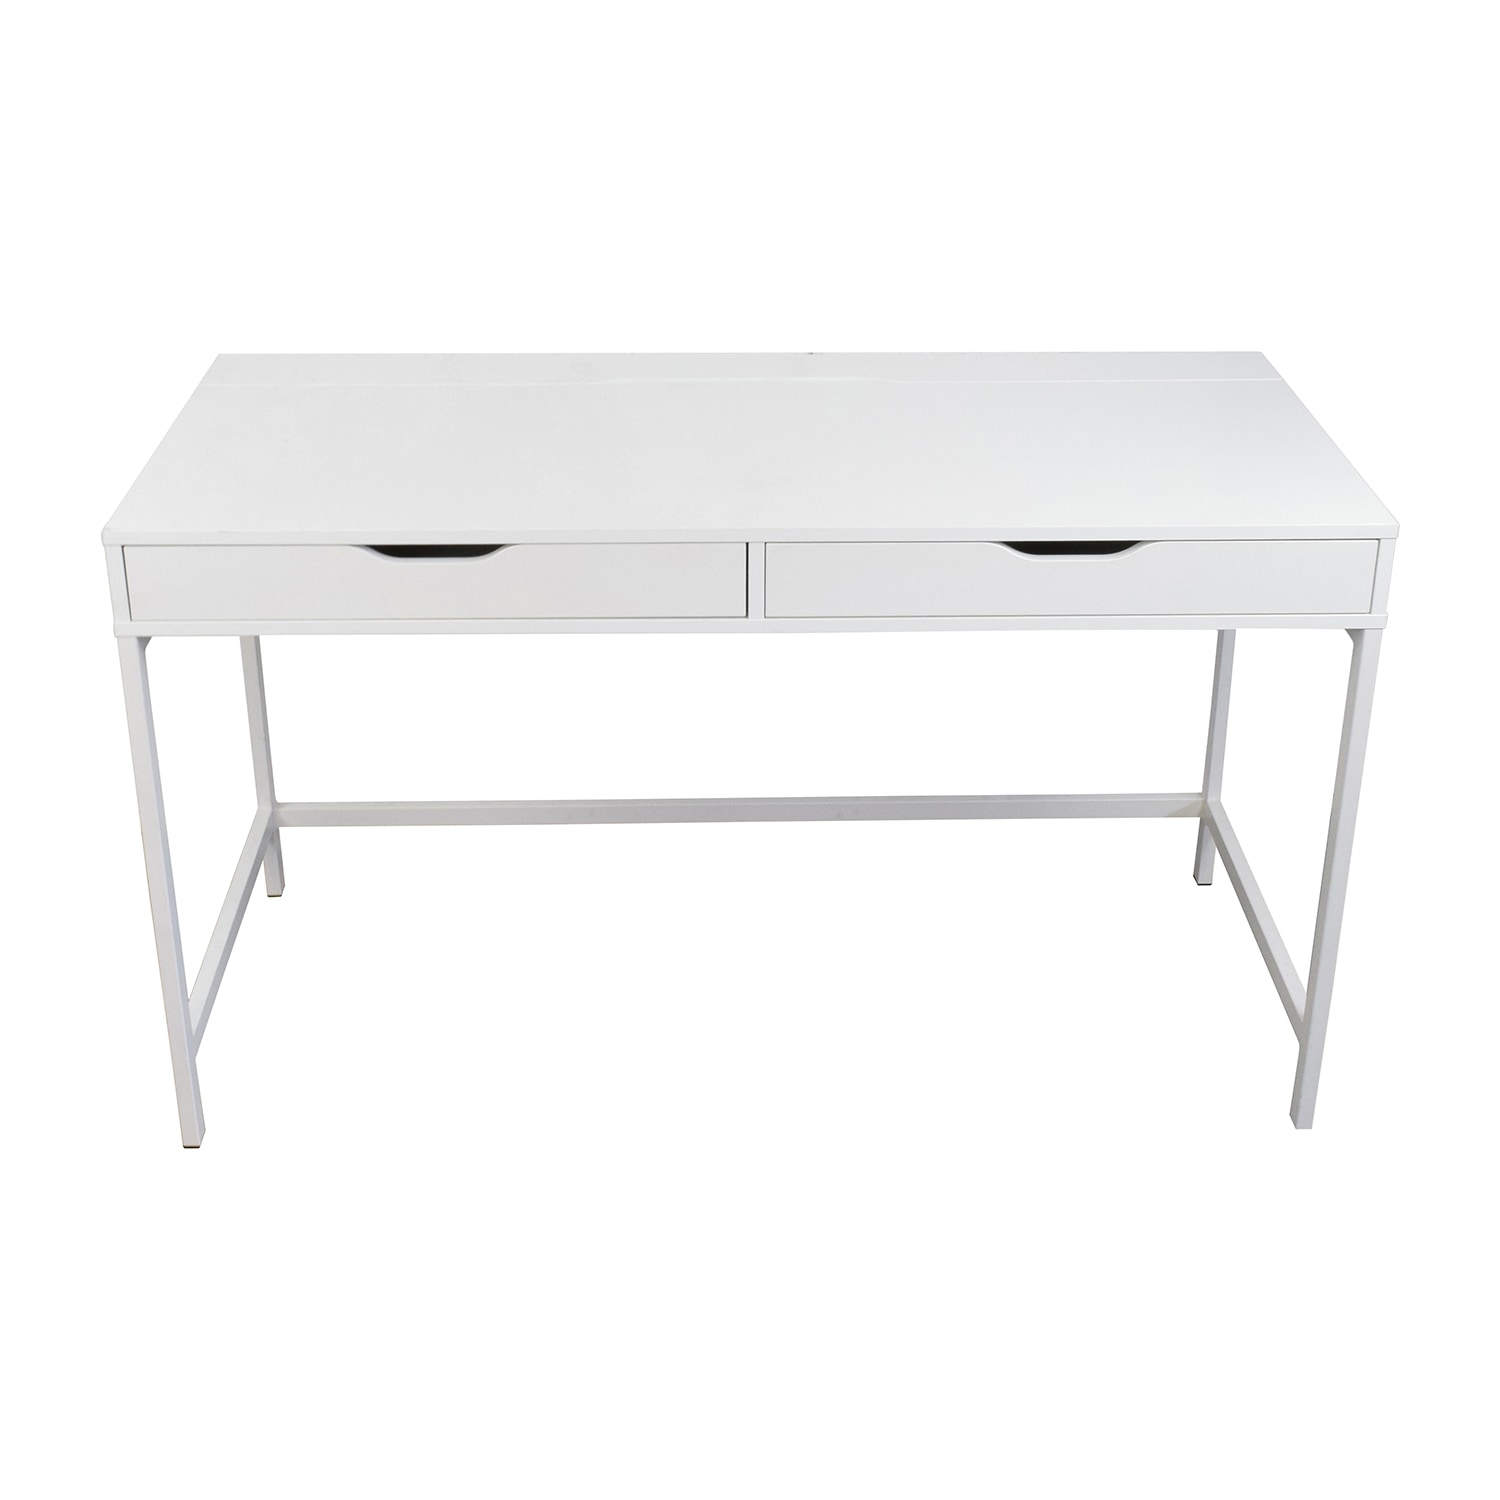 Tables & desks - IKEA